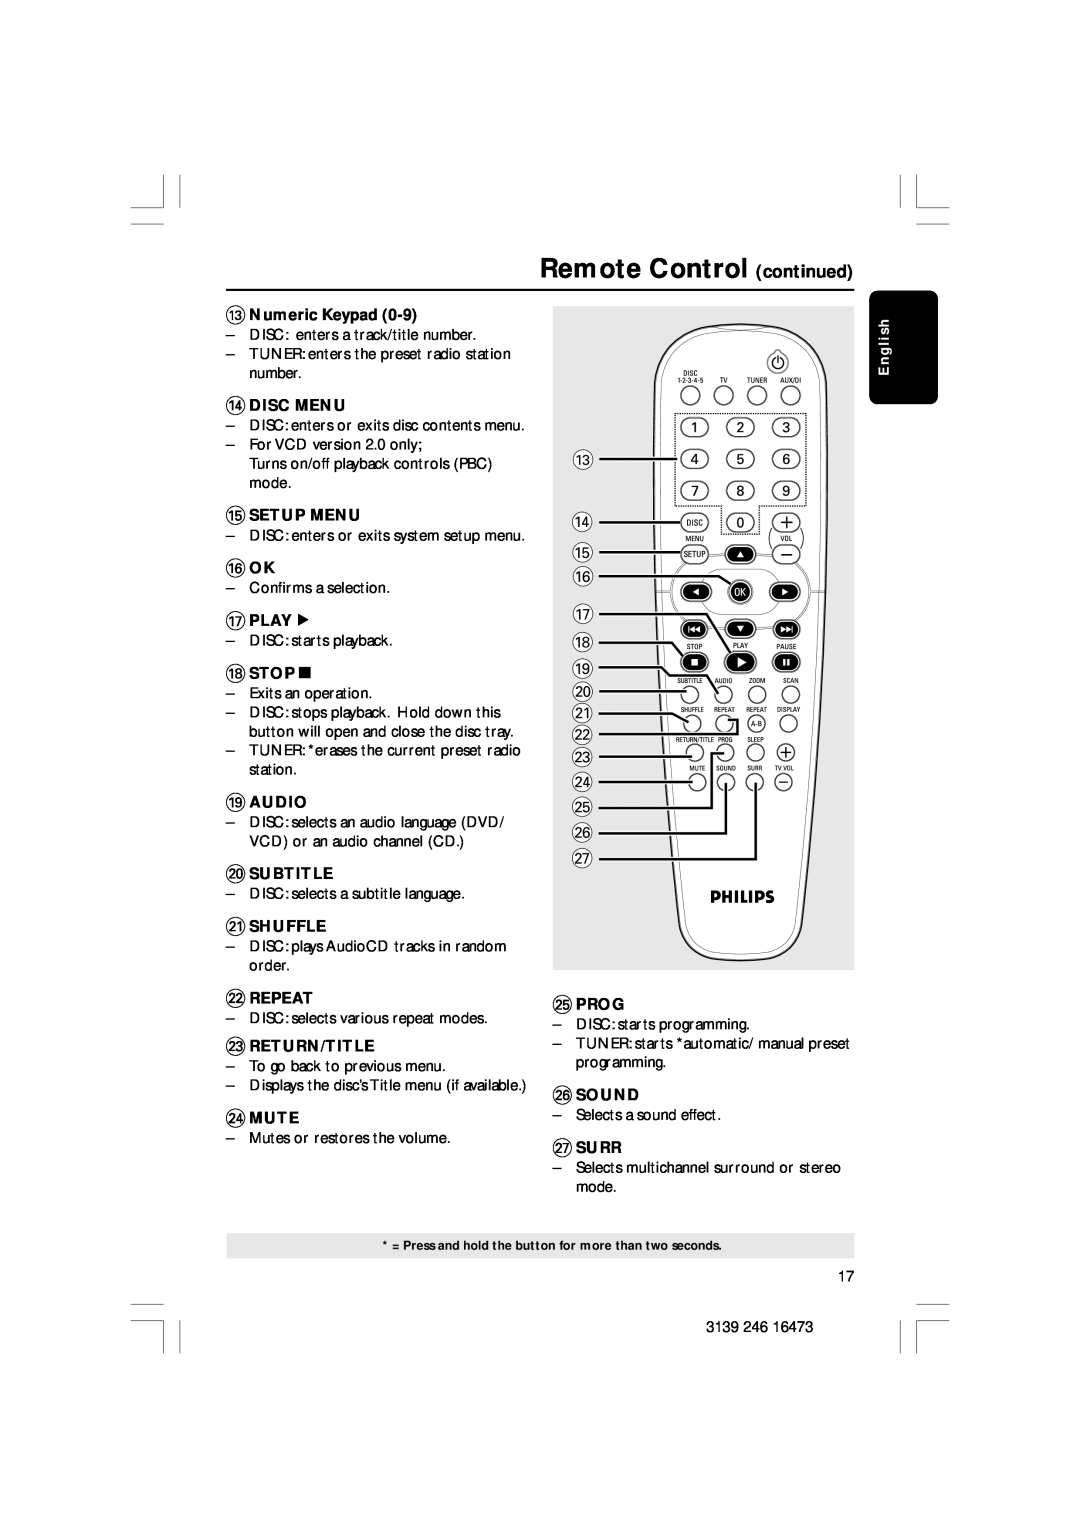 Philips HTS5510C Remote Control continued, # $ % & ¡ £ ≤ ∞ § ≥, #Numeric Keypad, $Disc Menu, Setup Menu, Playé, Stopç 